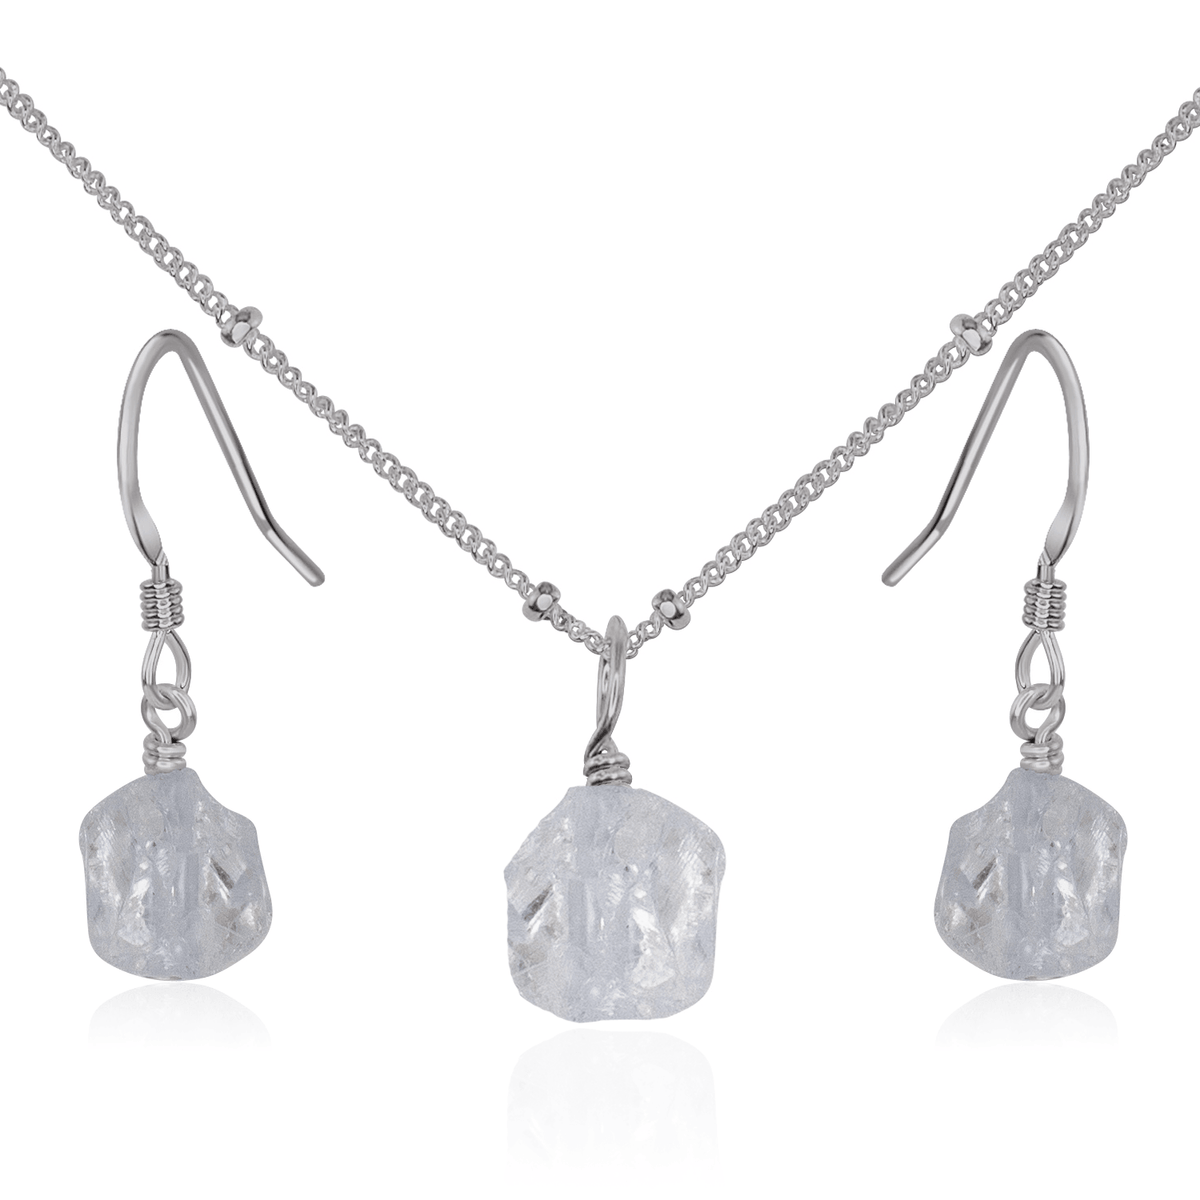 Raw Crystal Quartz Crystal Earrings & Necklace Set - Raw Crystal Quartz Crystal Earrings & Necklace Set - Stainless Steel / Satellite - Luna Tide Handmade Crystal Jewellery